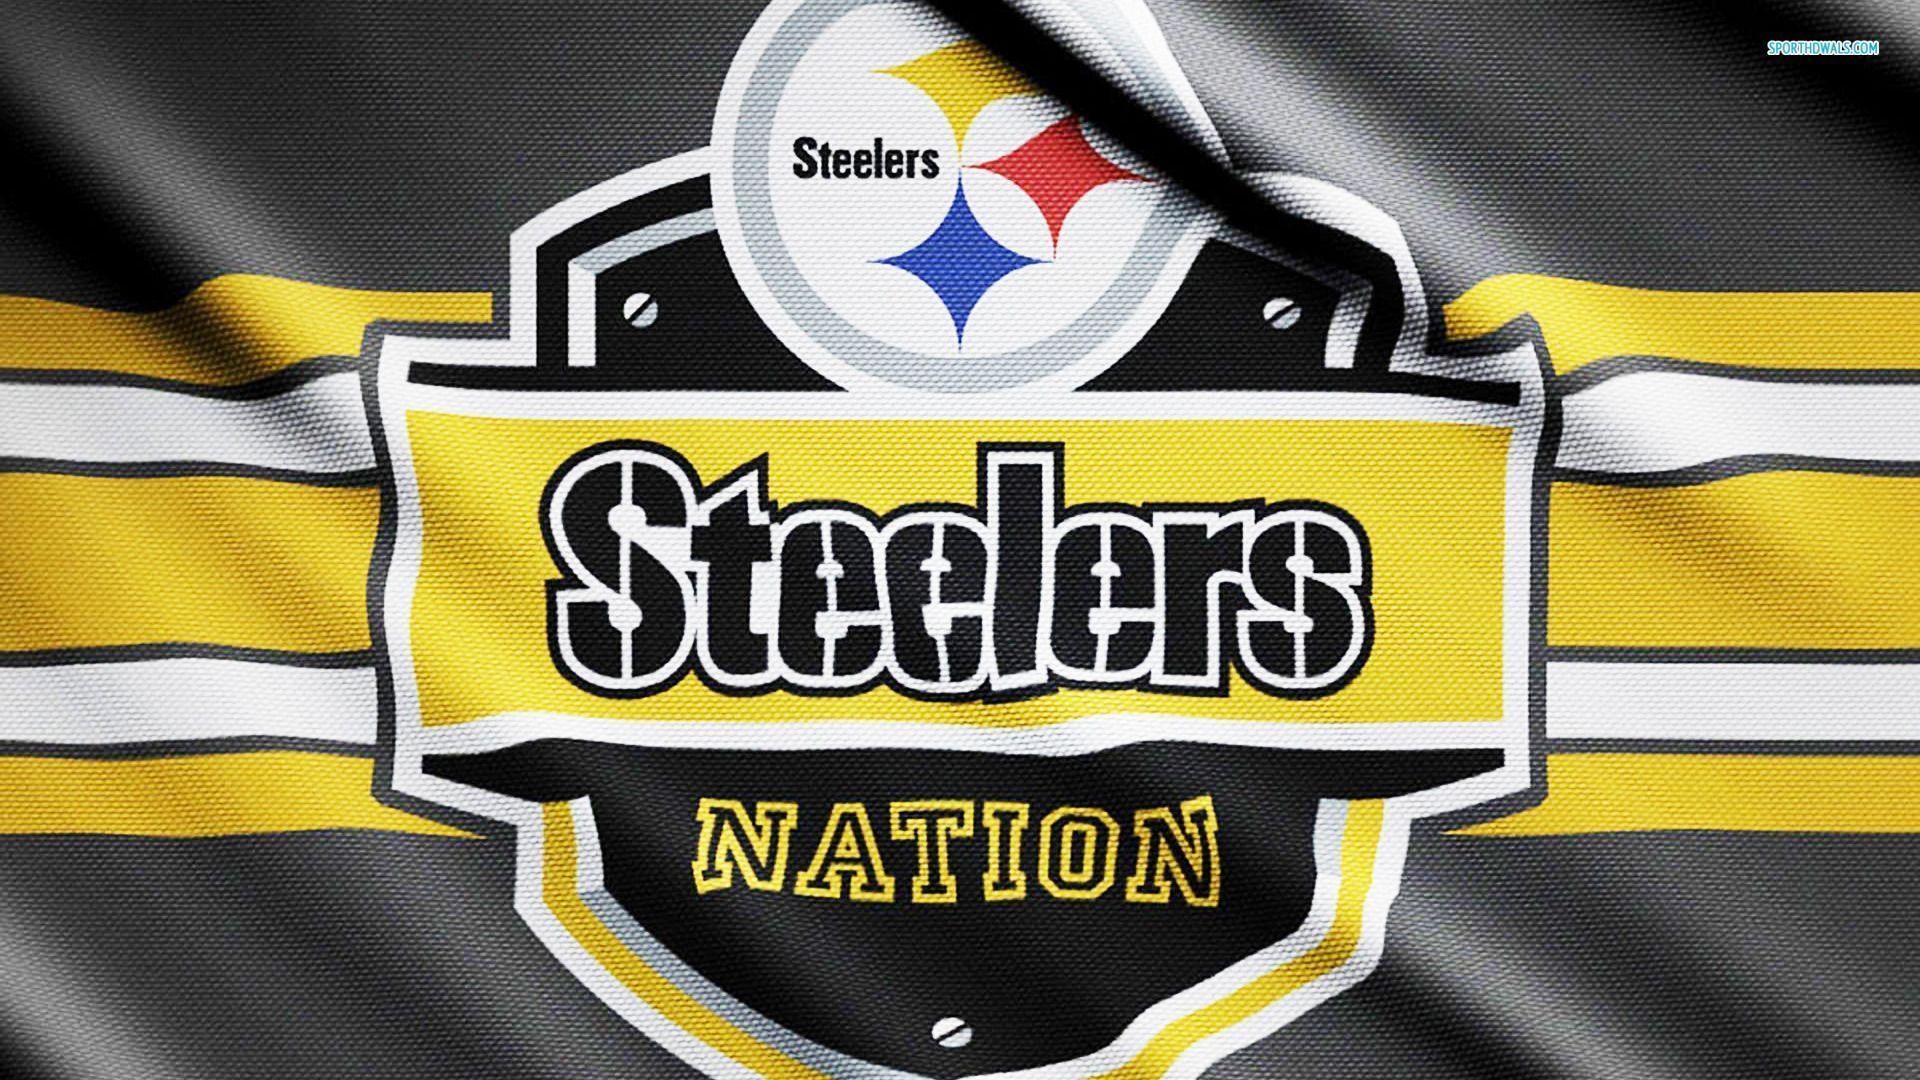 Pittsburgh Steelers wallpaper HD & Logo Wallpaper